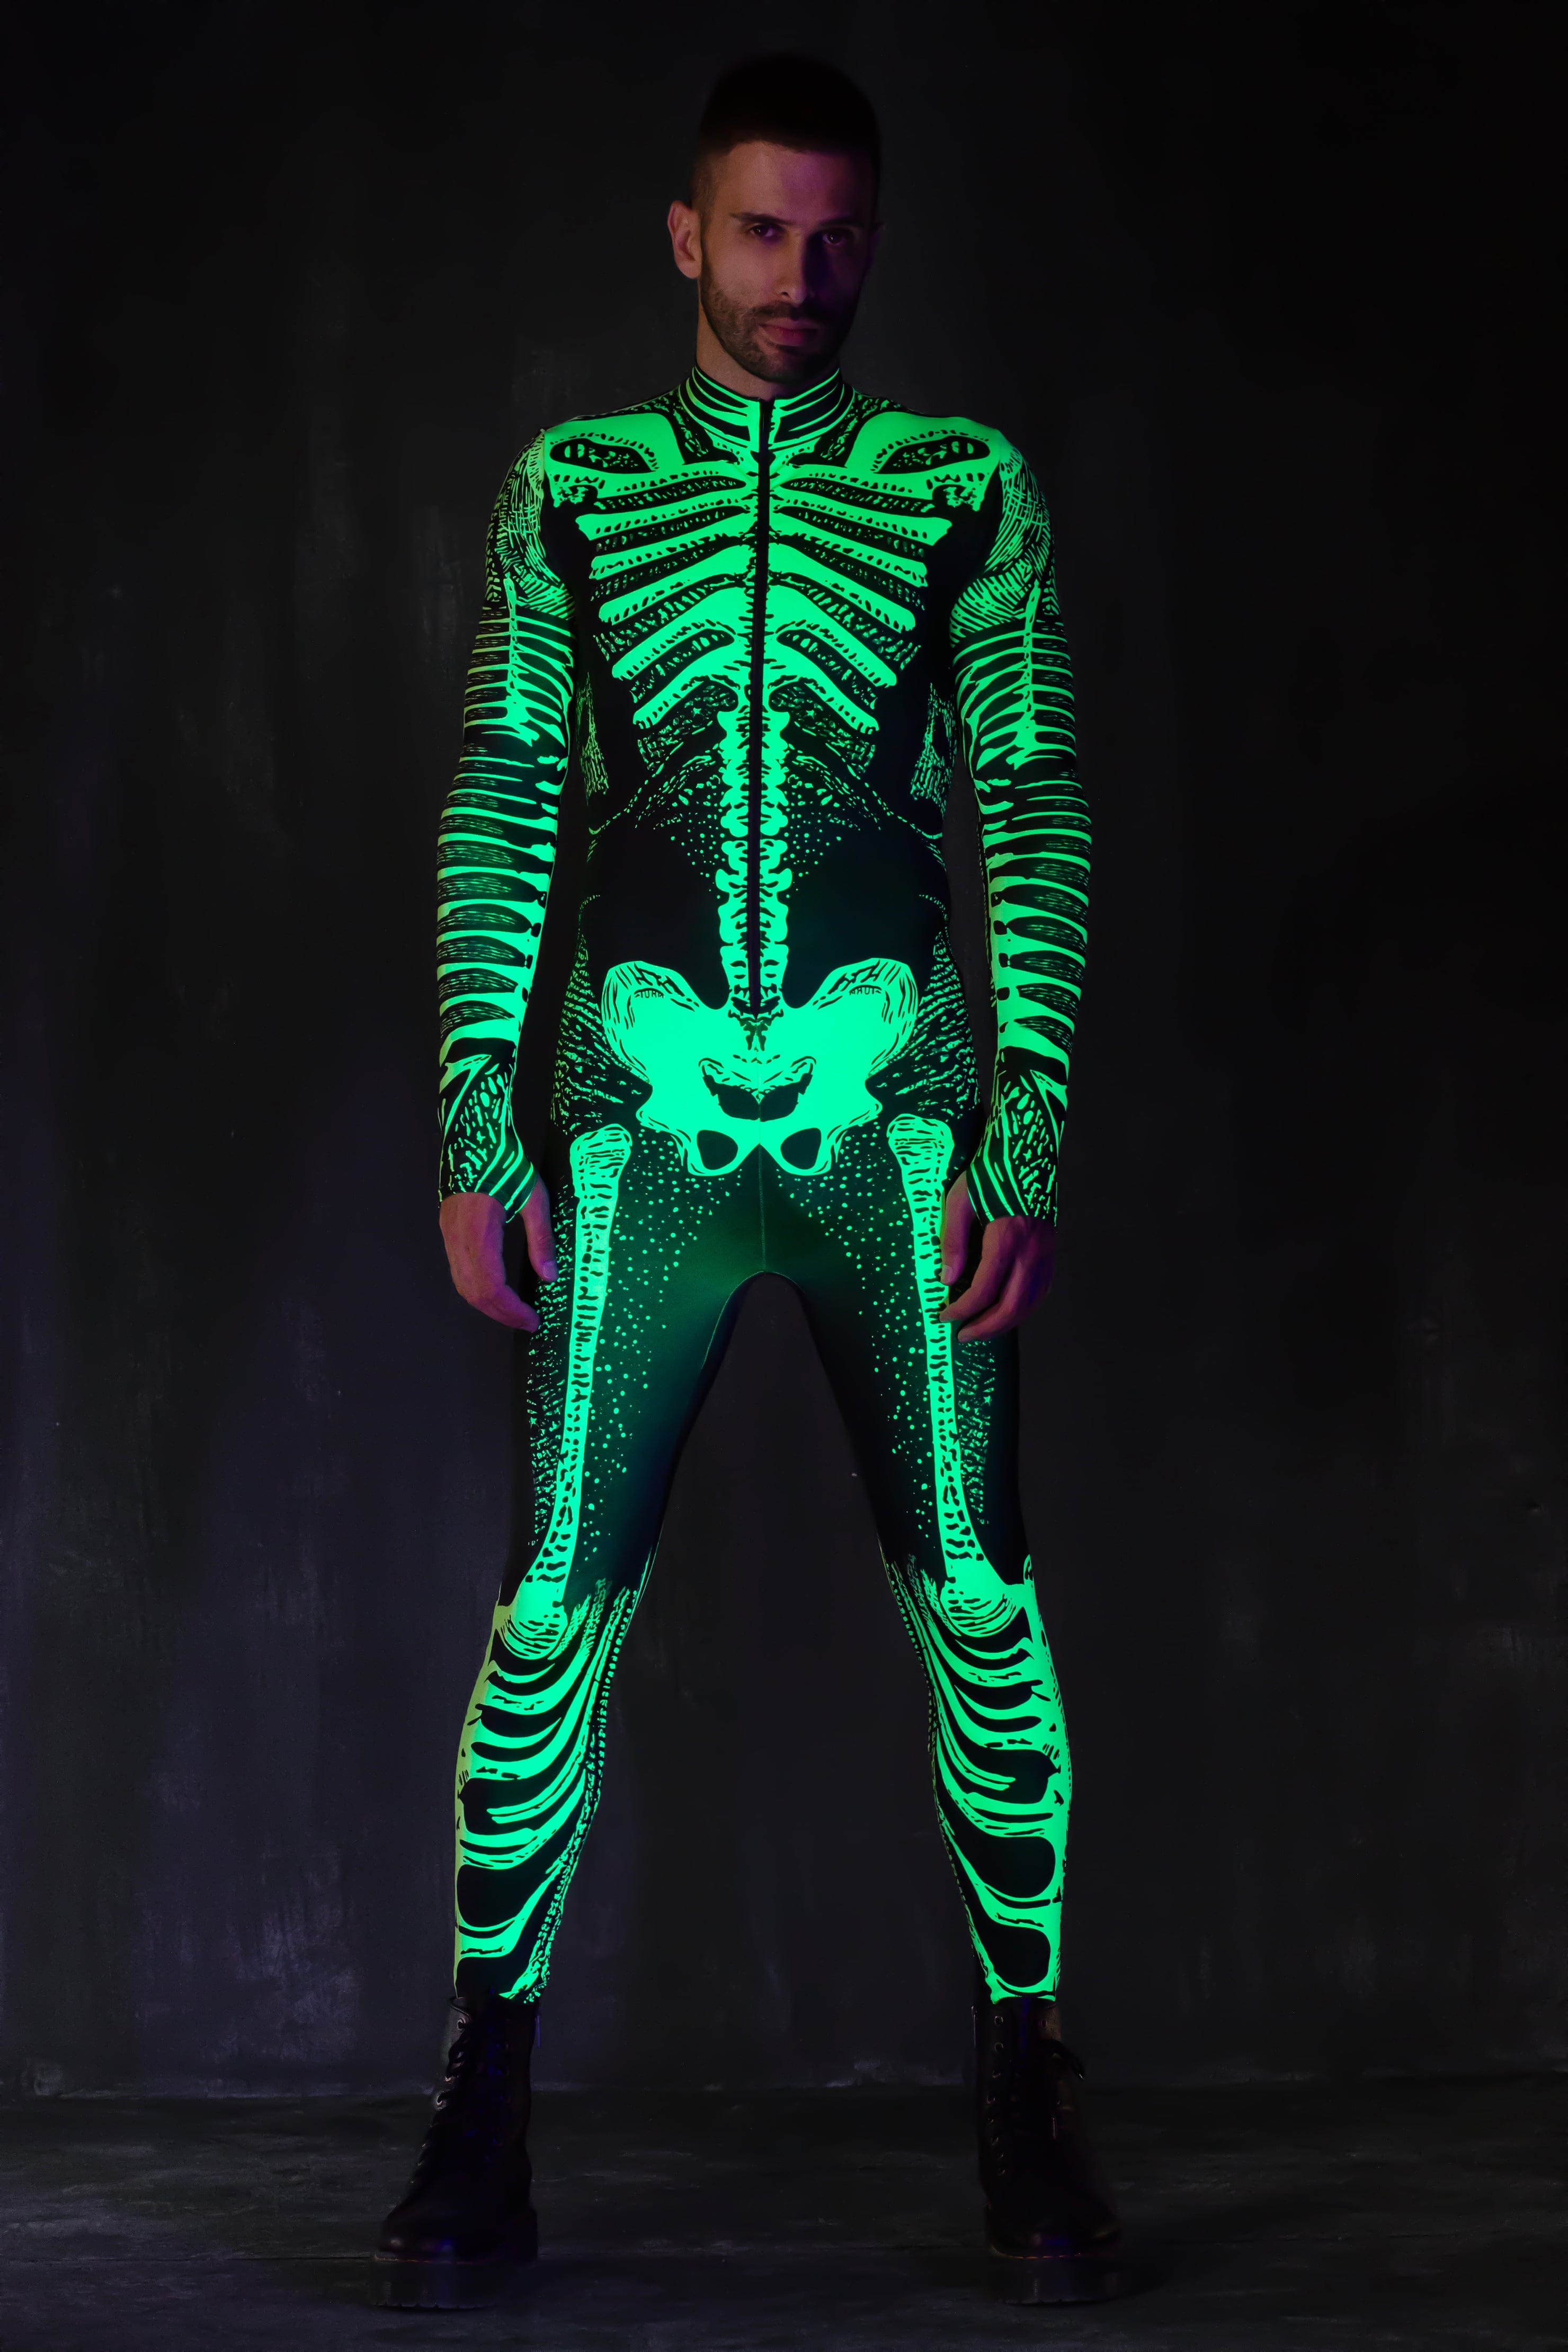 Inhuman Green Male Costume - BADINKA